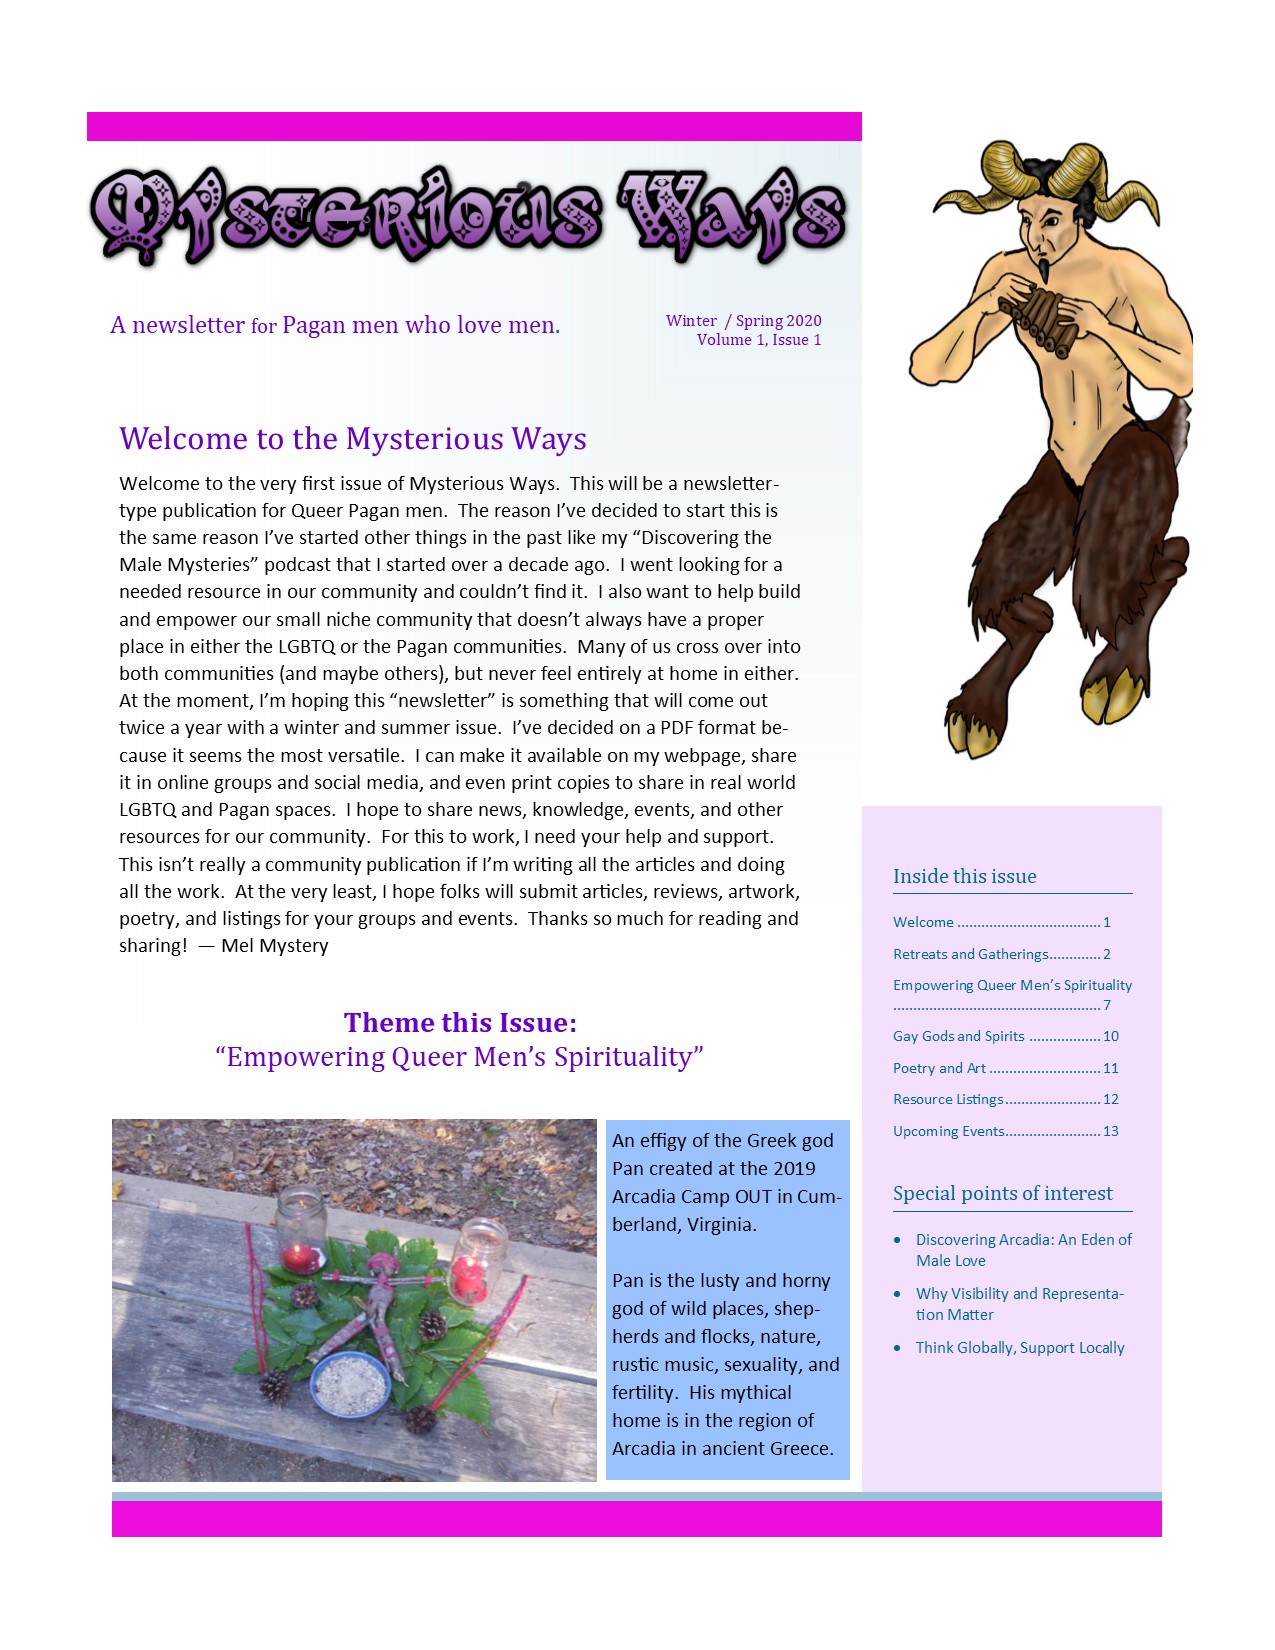 Mysterious Ways Newsletter, Winter / Spring 2020